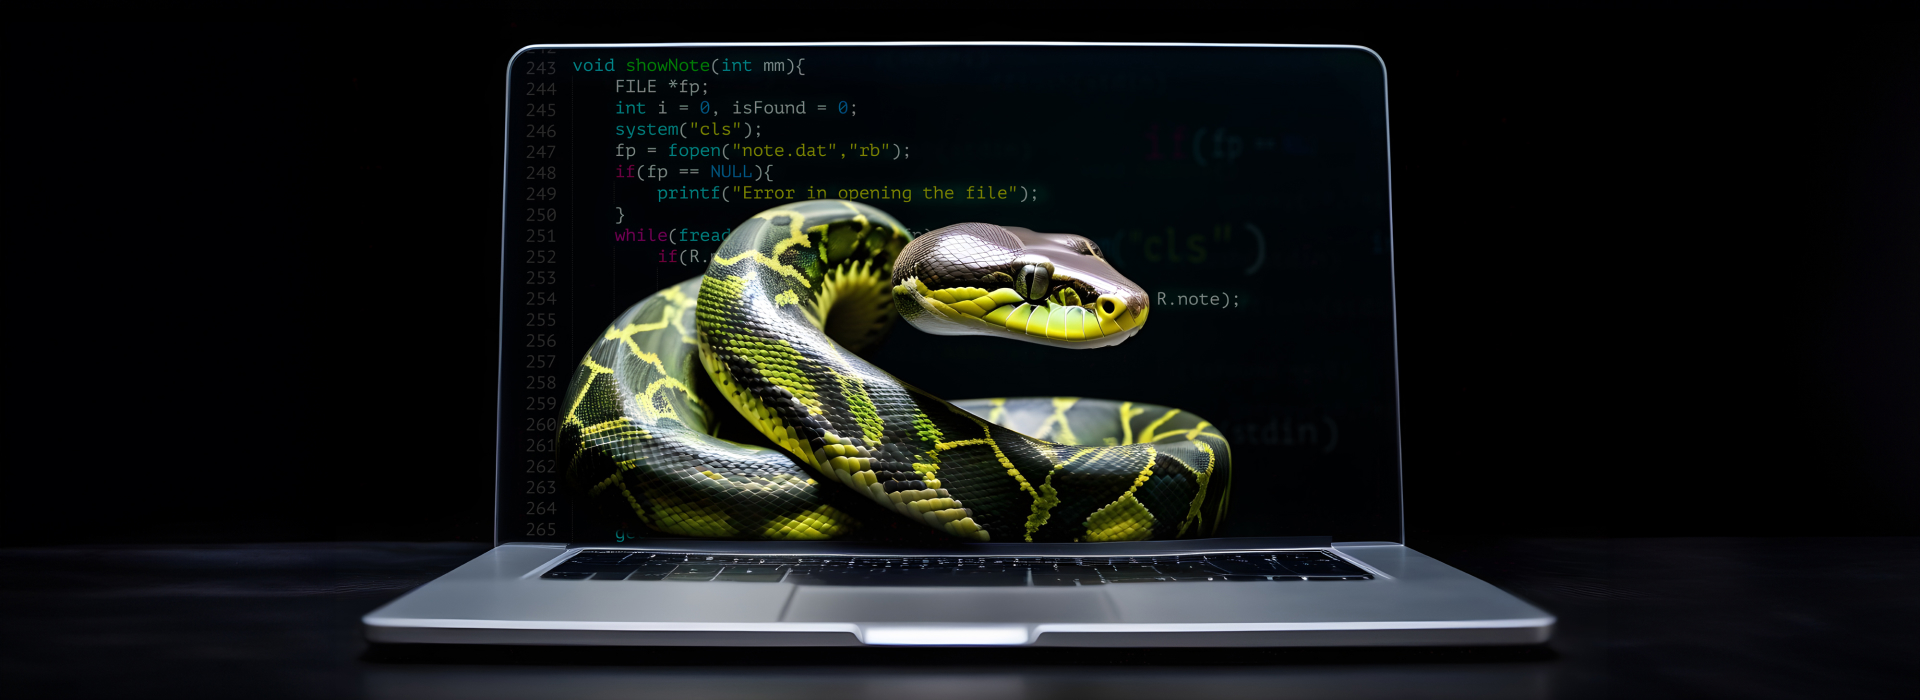 Python integrations